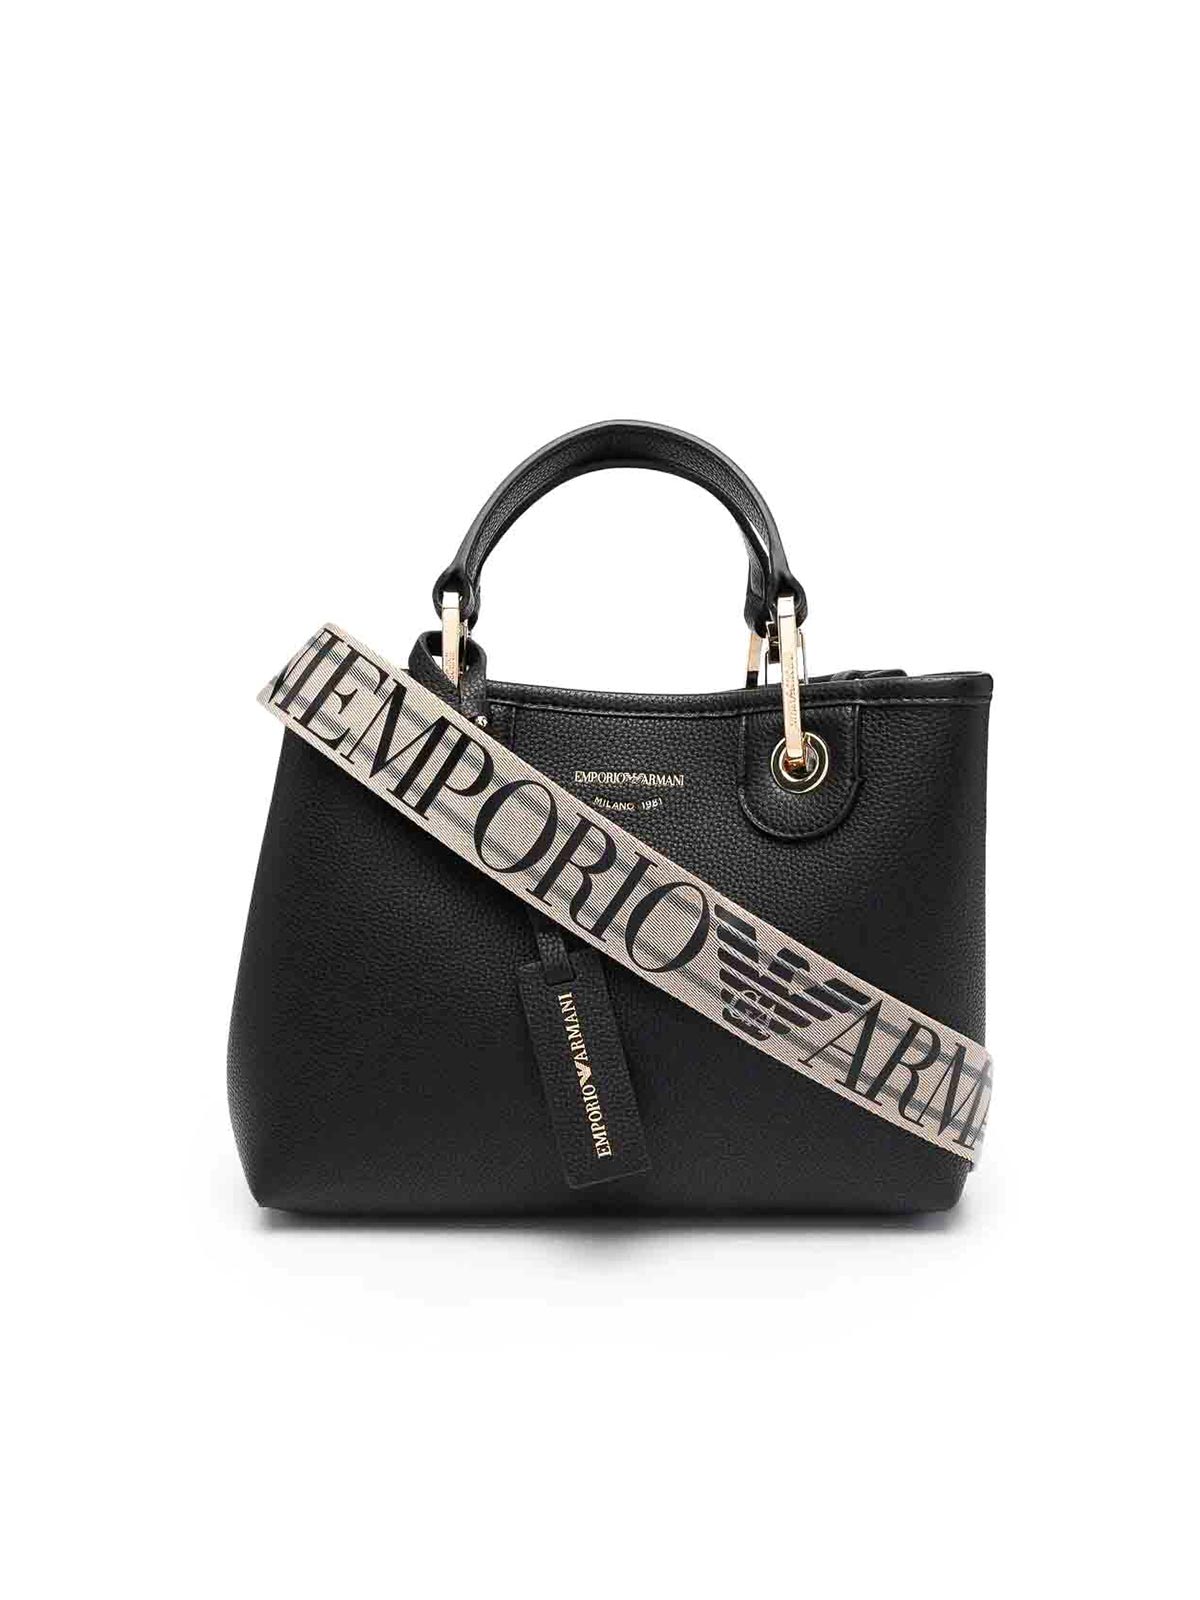 Emporio Armani Shopping Bag In Black